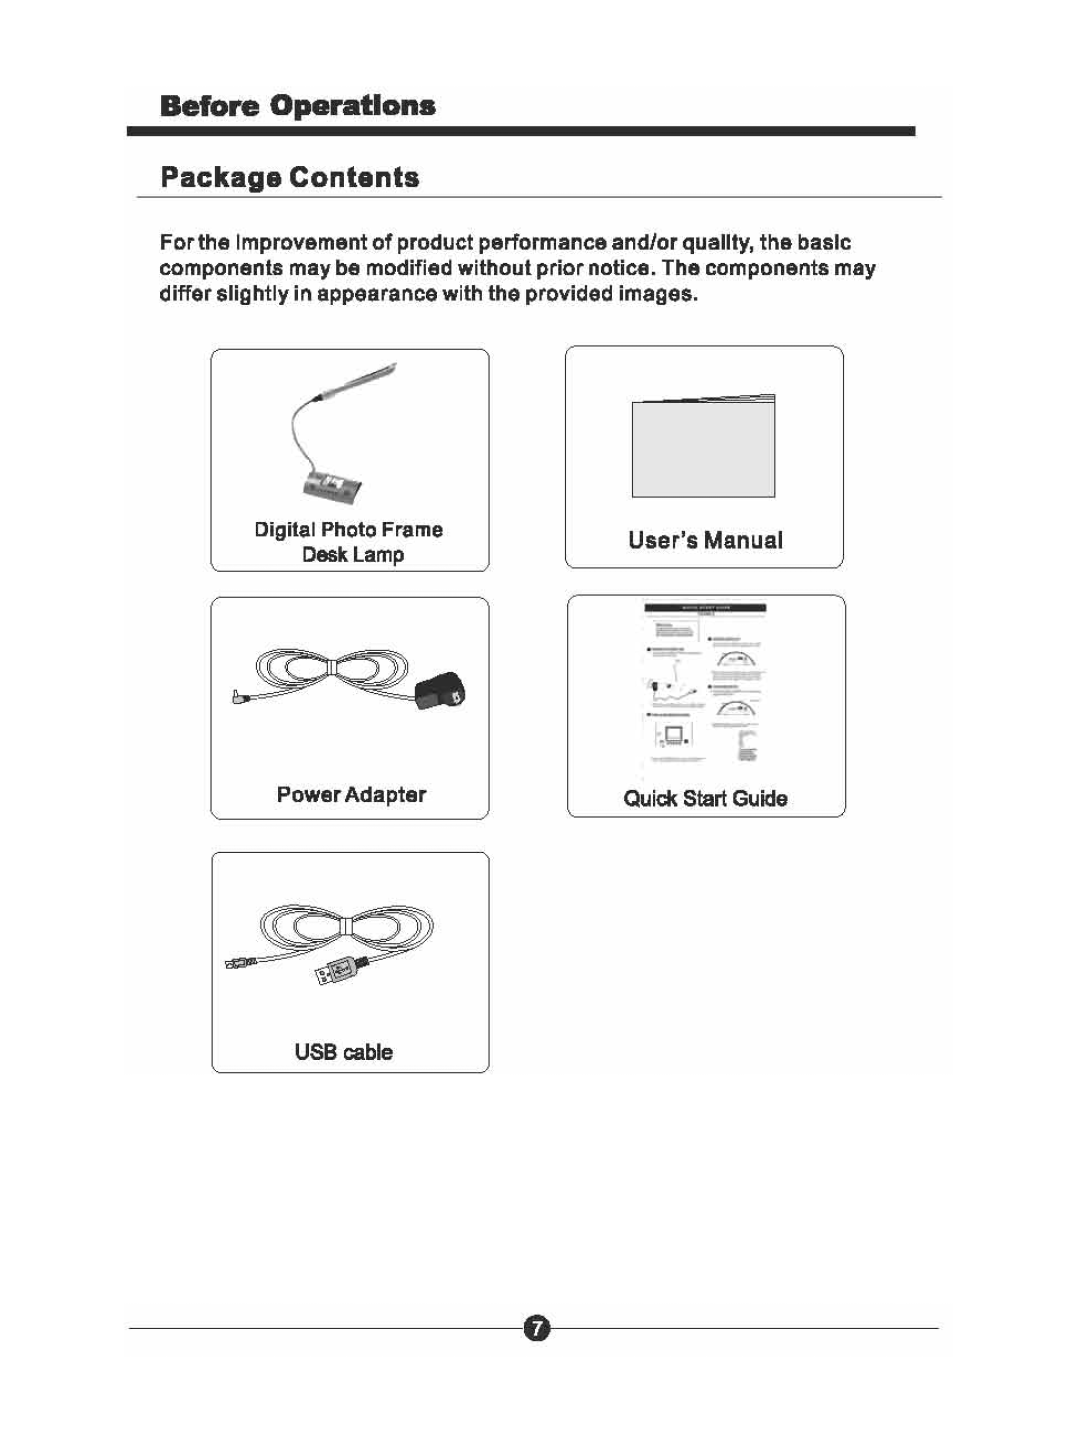 Sungale CD358LD manual 